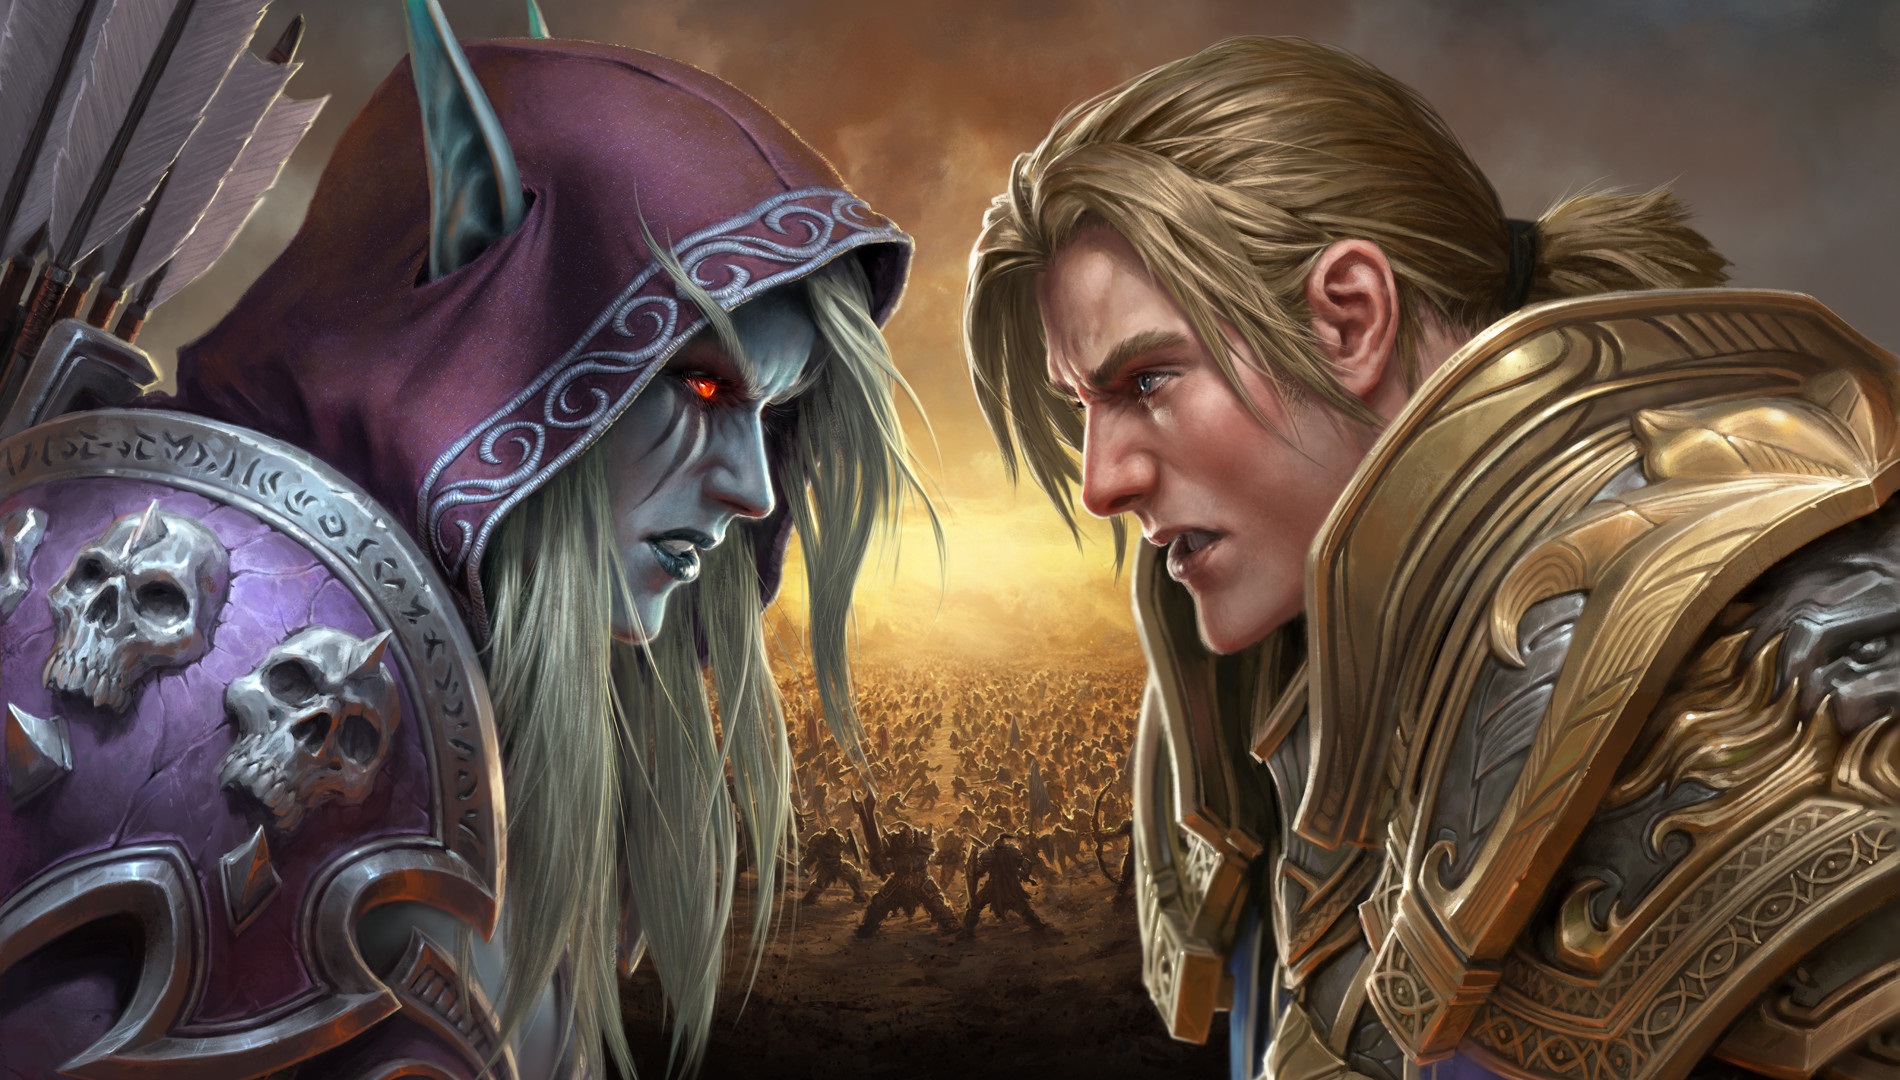 General 1900x1080 digital art artwork video games Warcraft World of Warcraft World of Warcraft: Battle for Azeroth Sylvanas Windrunner Anduin Wrynn blonde elven white hair red eyes long hair